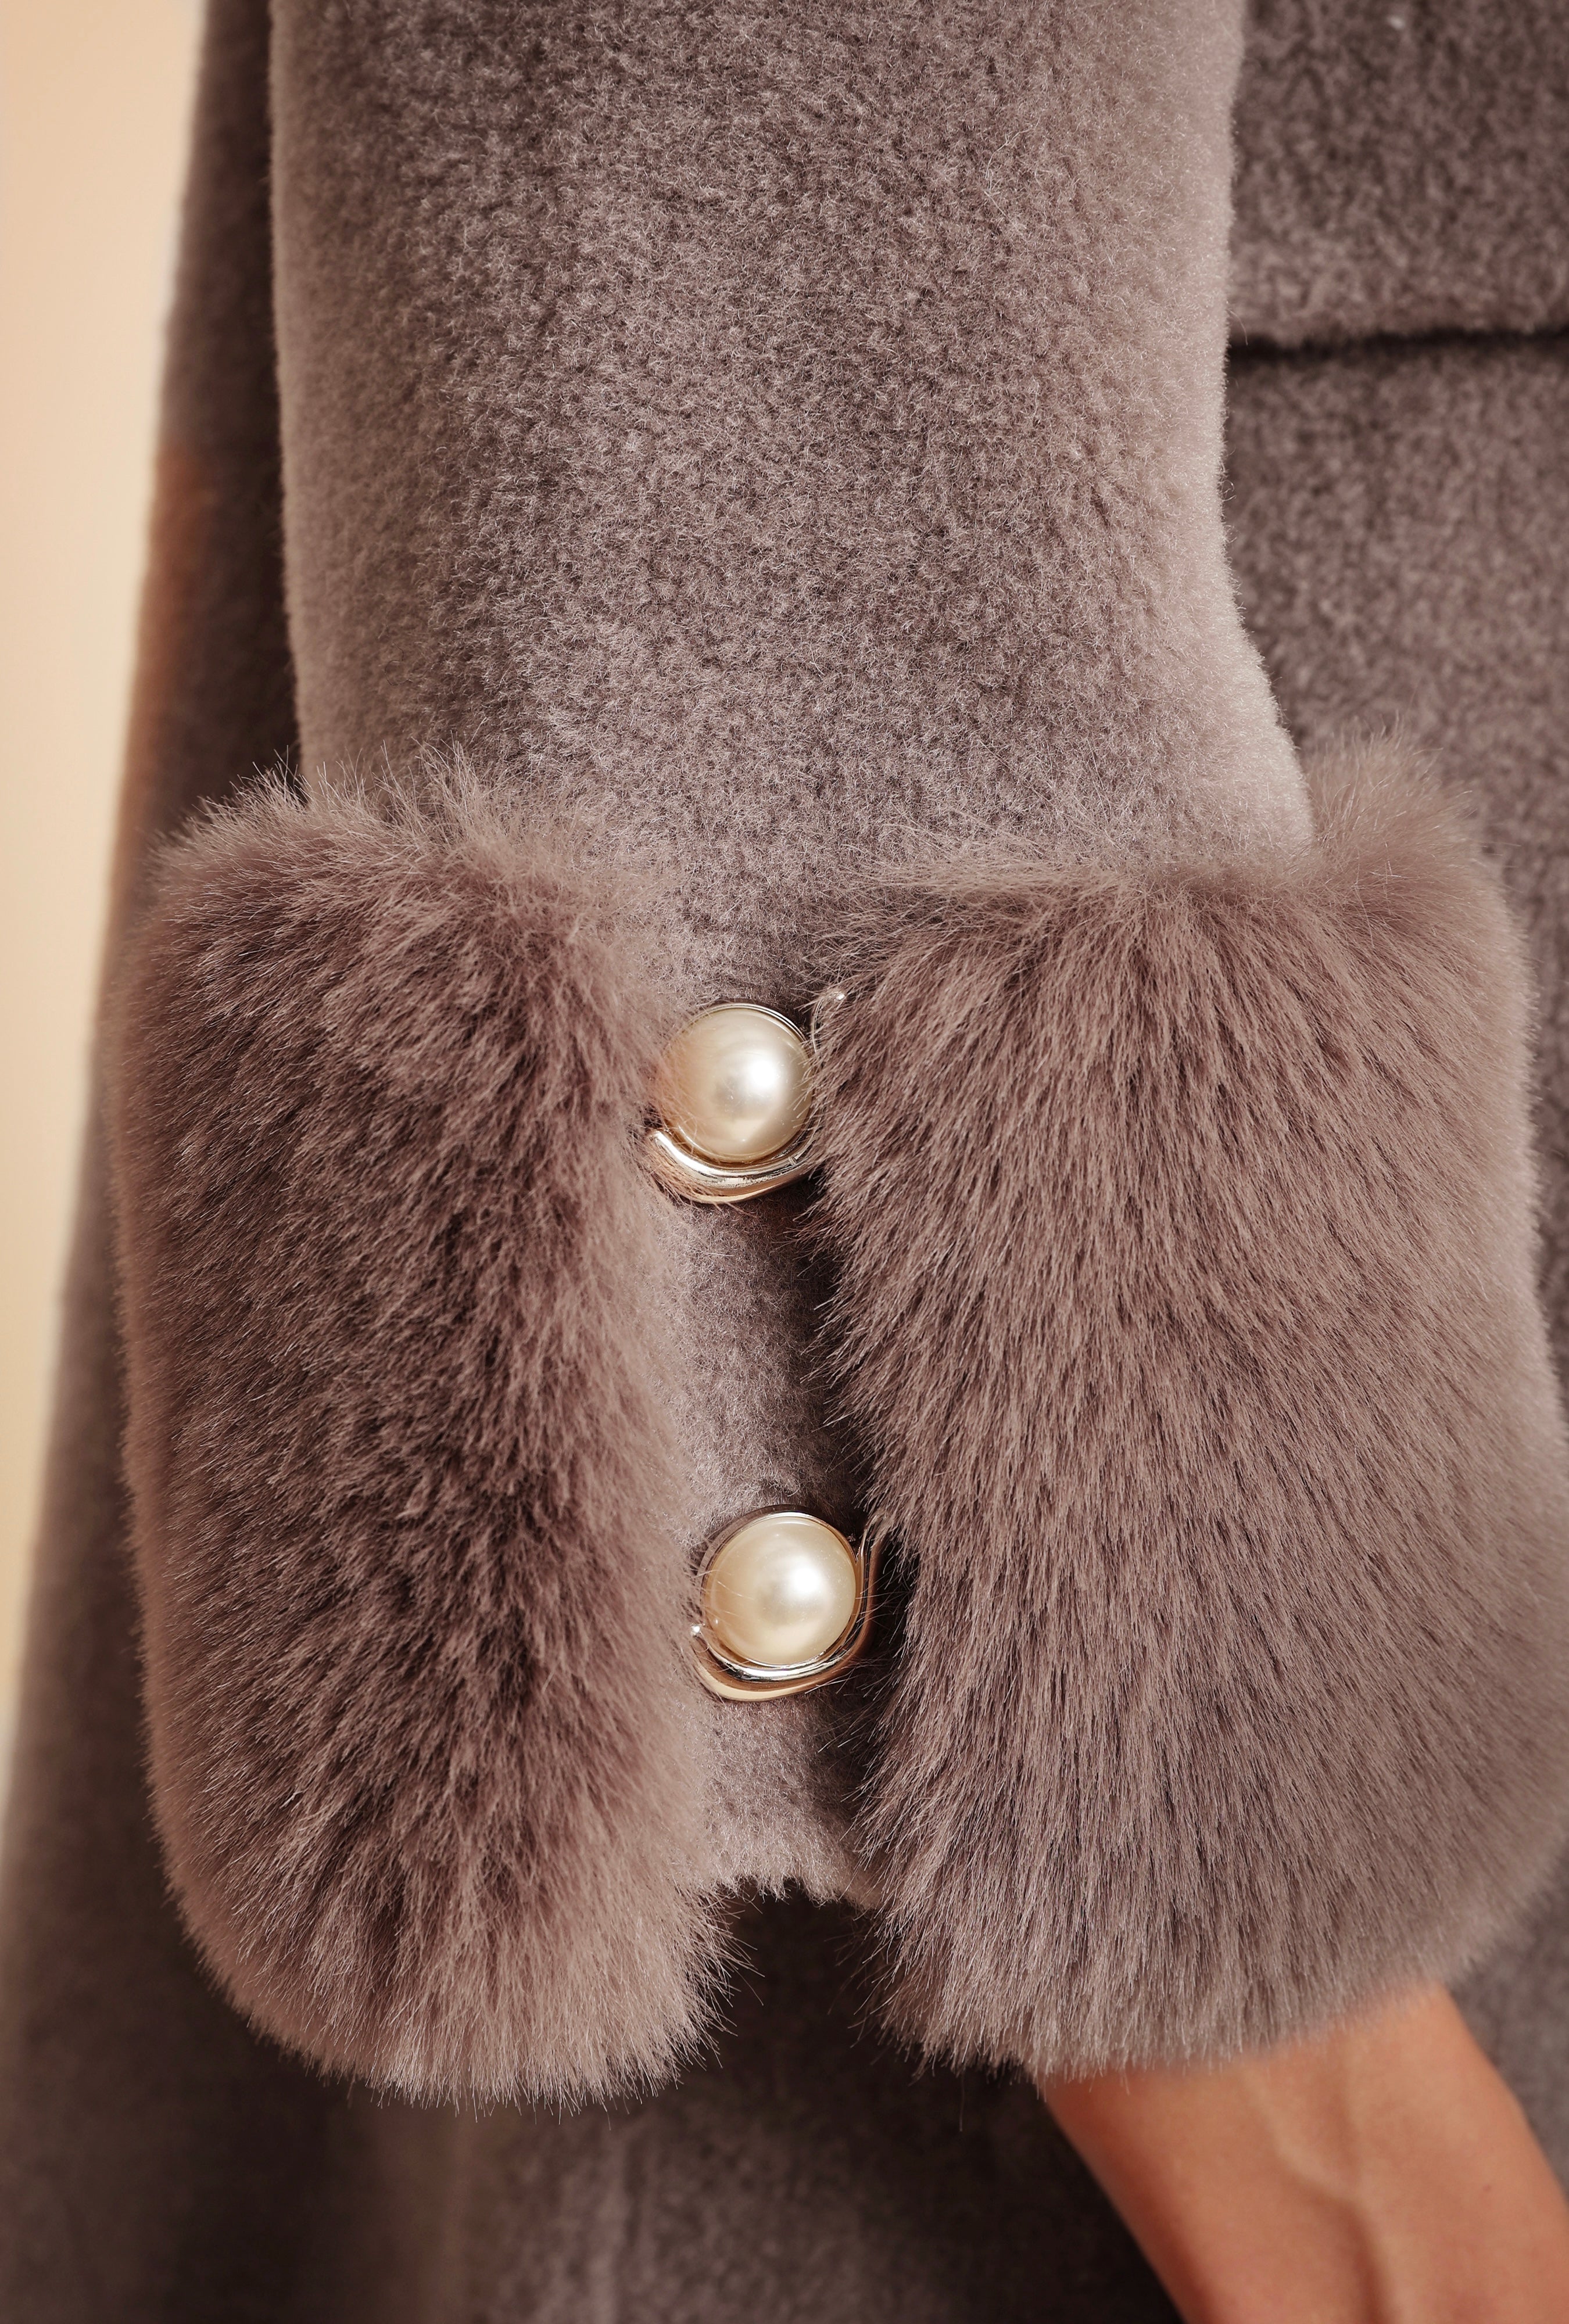 'Hayworth' Wool and Faux Fur Coat in Grigio